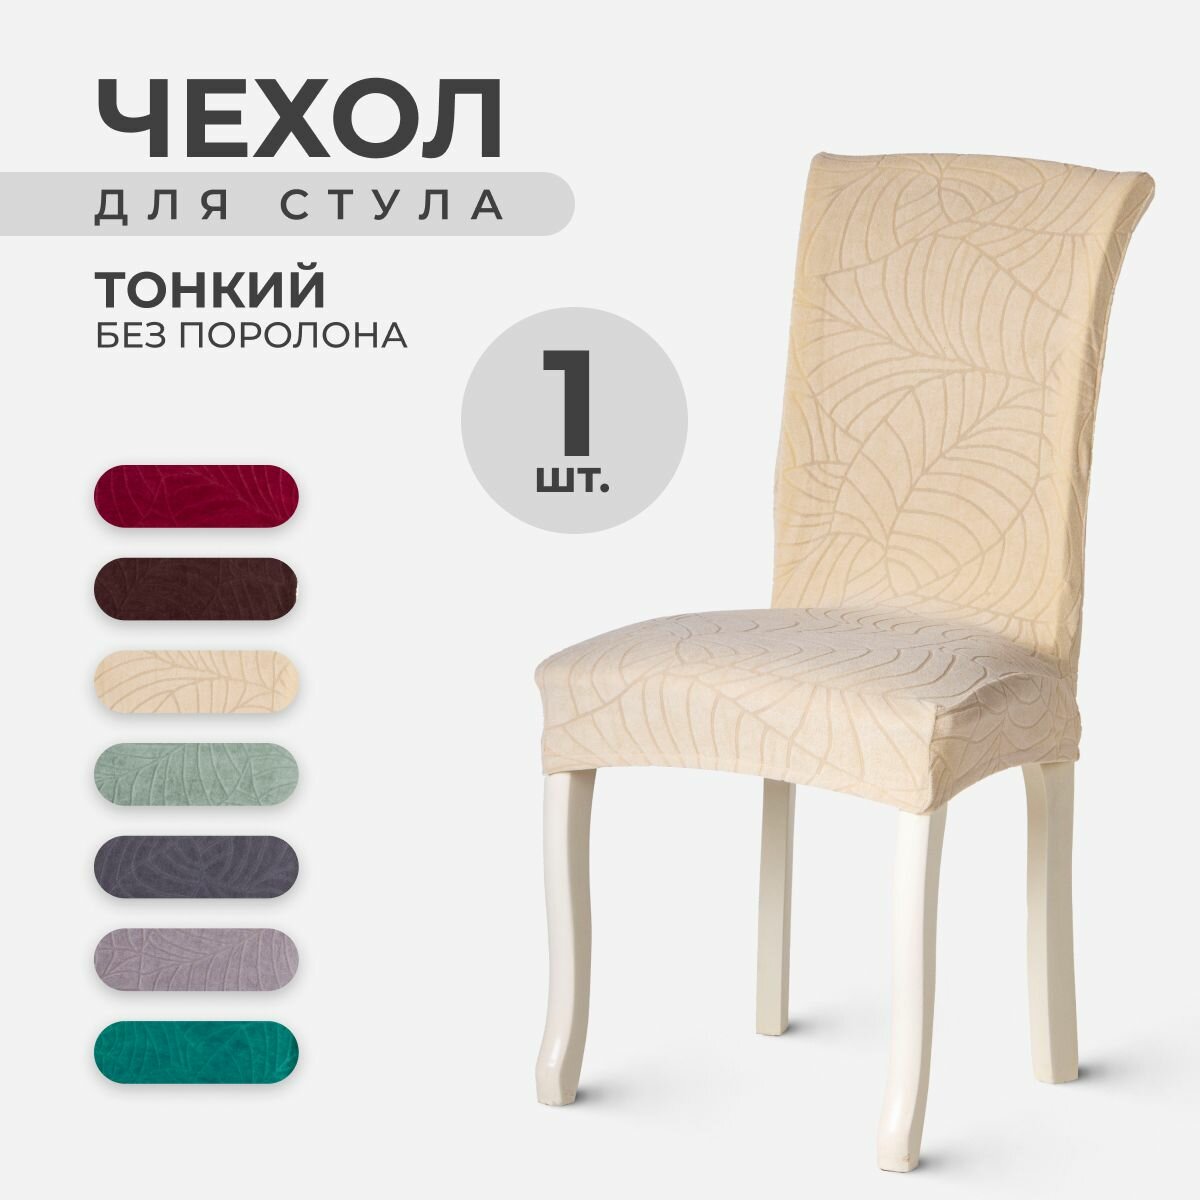 Чехол LuxAlto на стул со спинкой, ткань Leaves, Бежевый, 1 штука